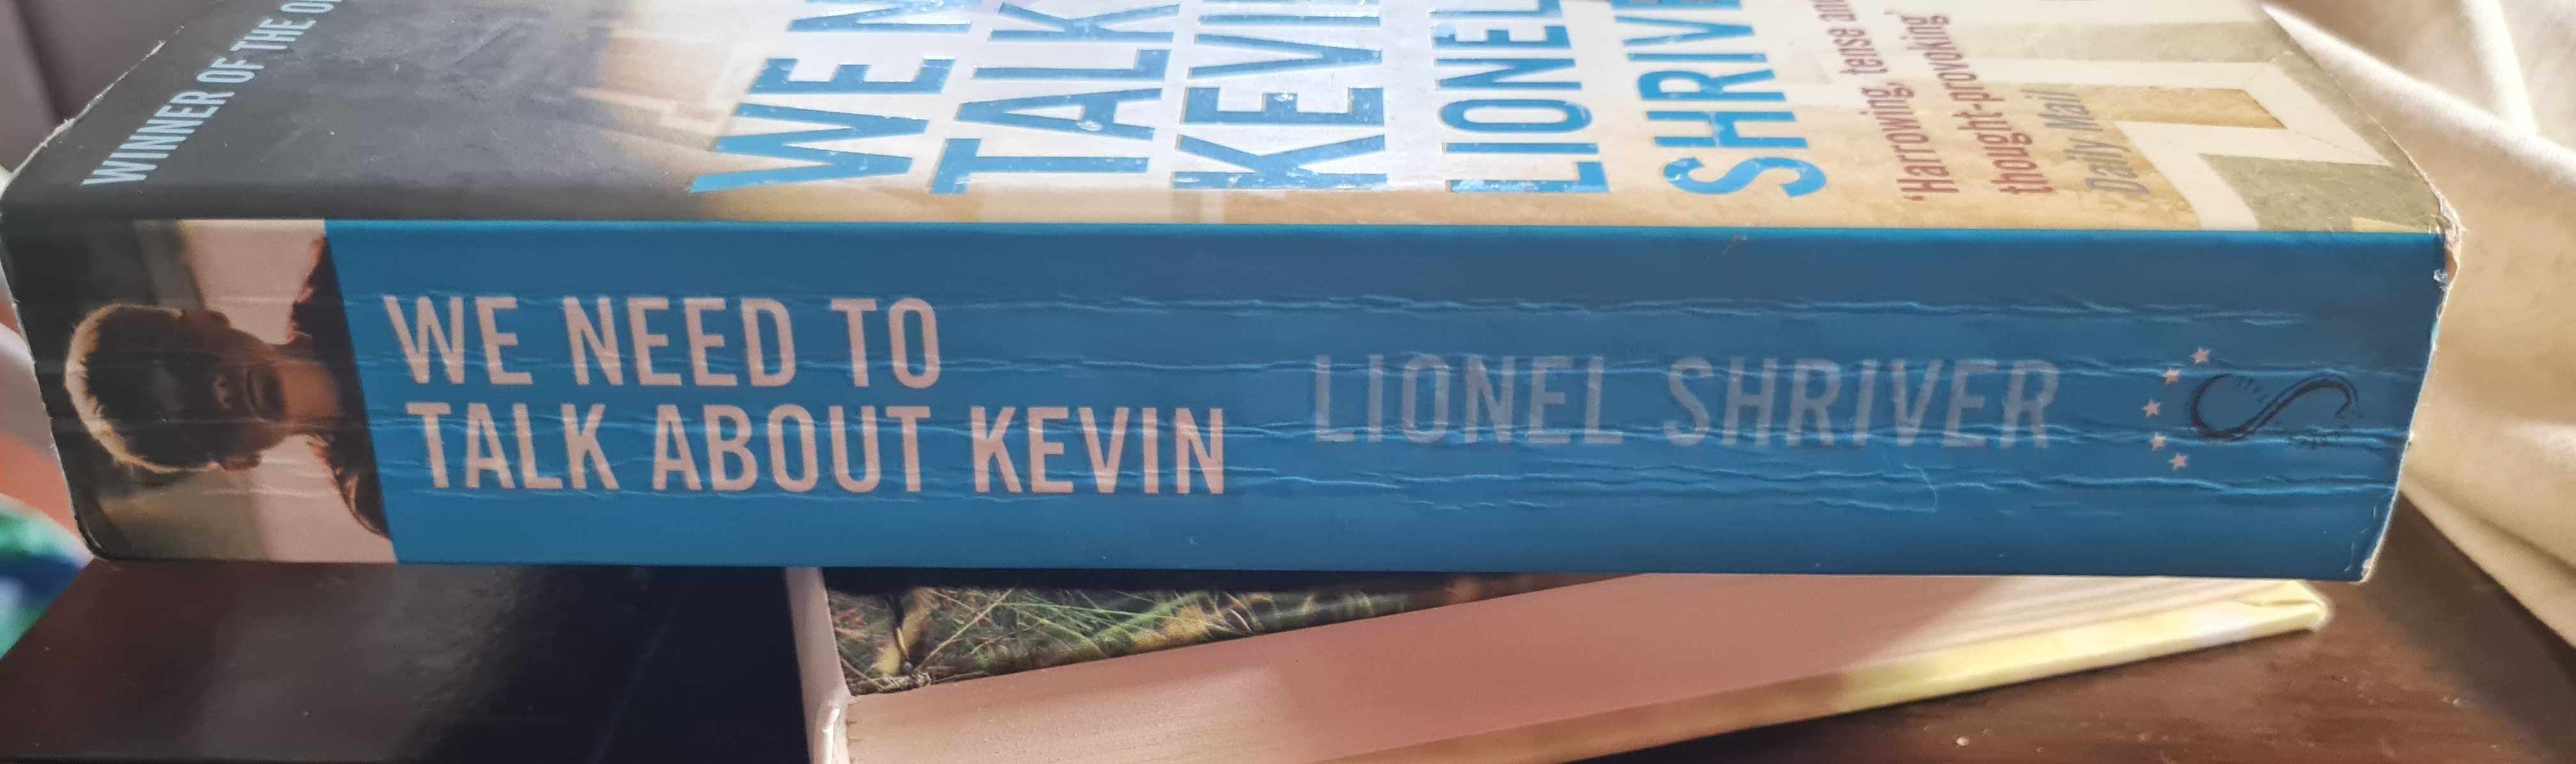 Temos que Falar Sobre Kevin de Lionel Shriver